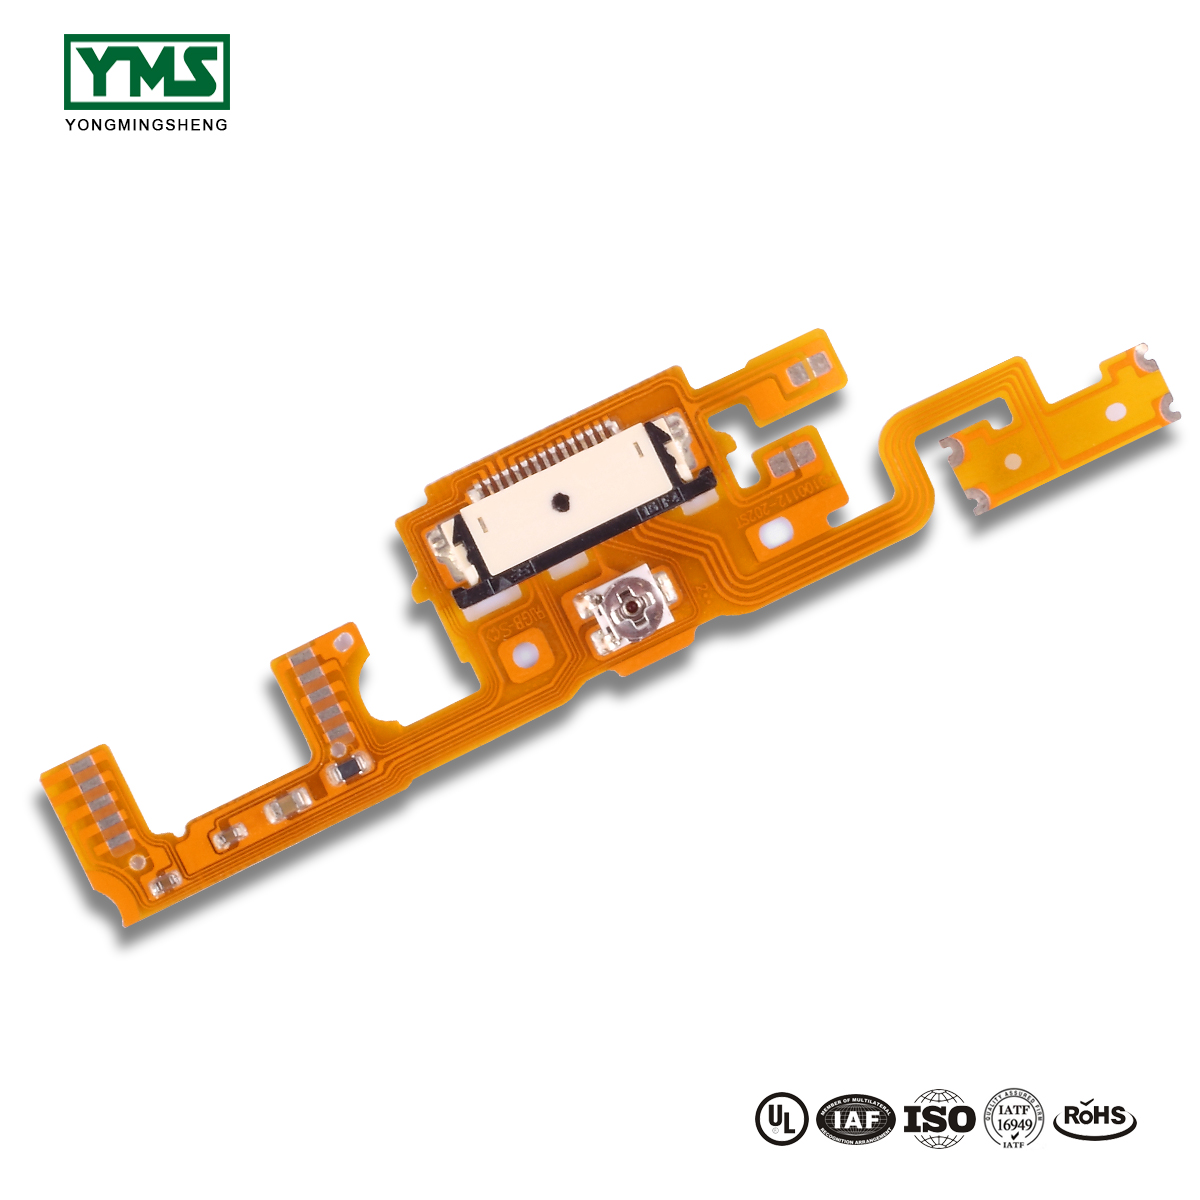 OEM/ODM Manufacturer Fr4 Ultra-Thin Pcb - Price Sheet for Flexible Scale Cutting Board – Yongmingsheng